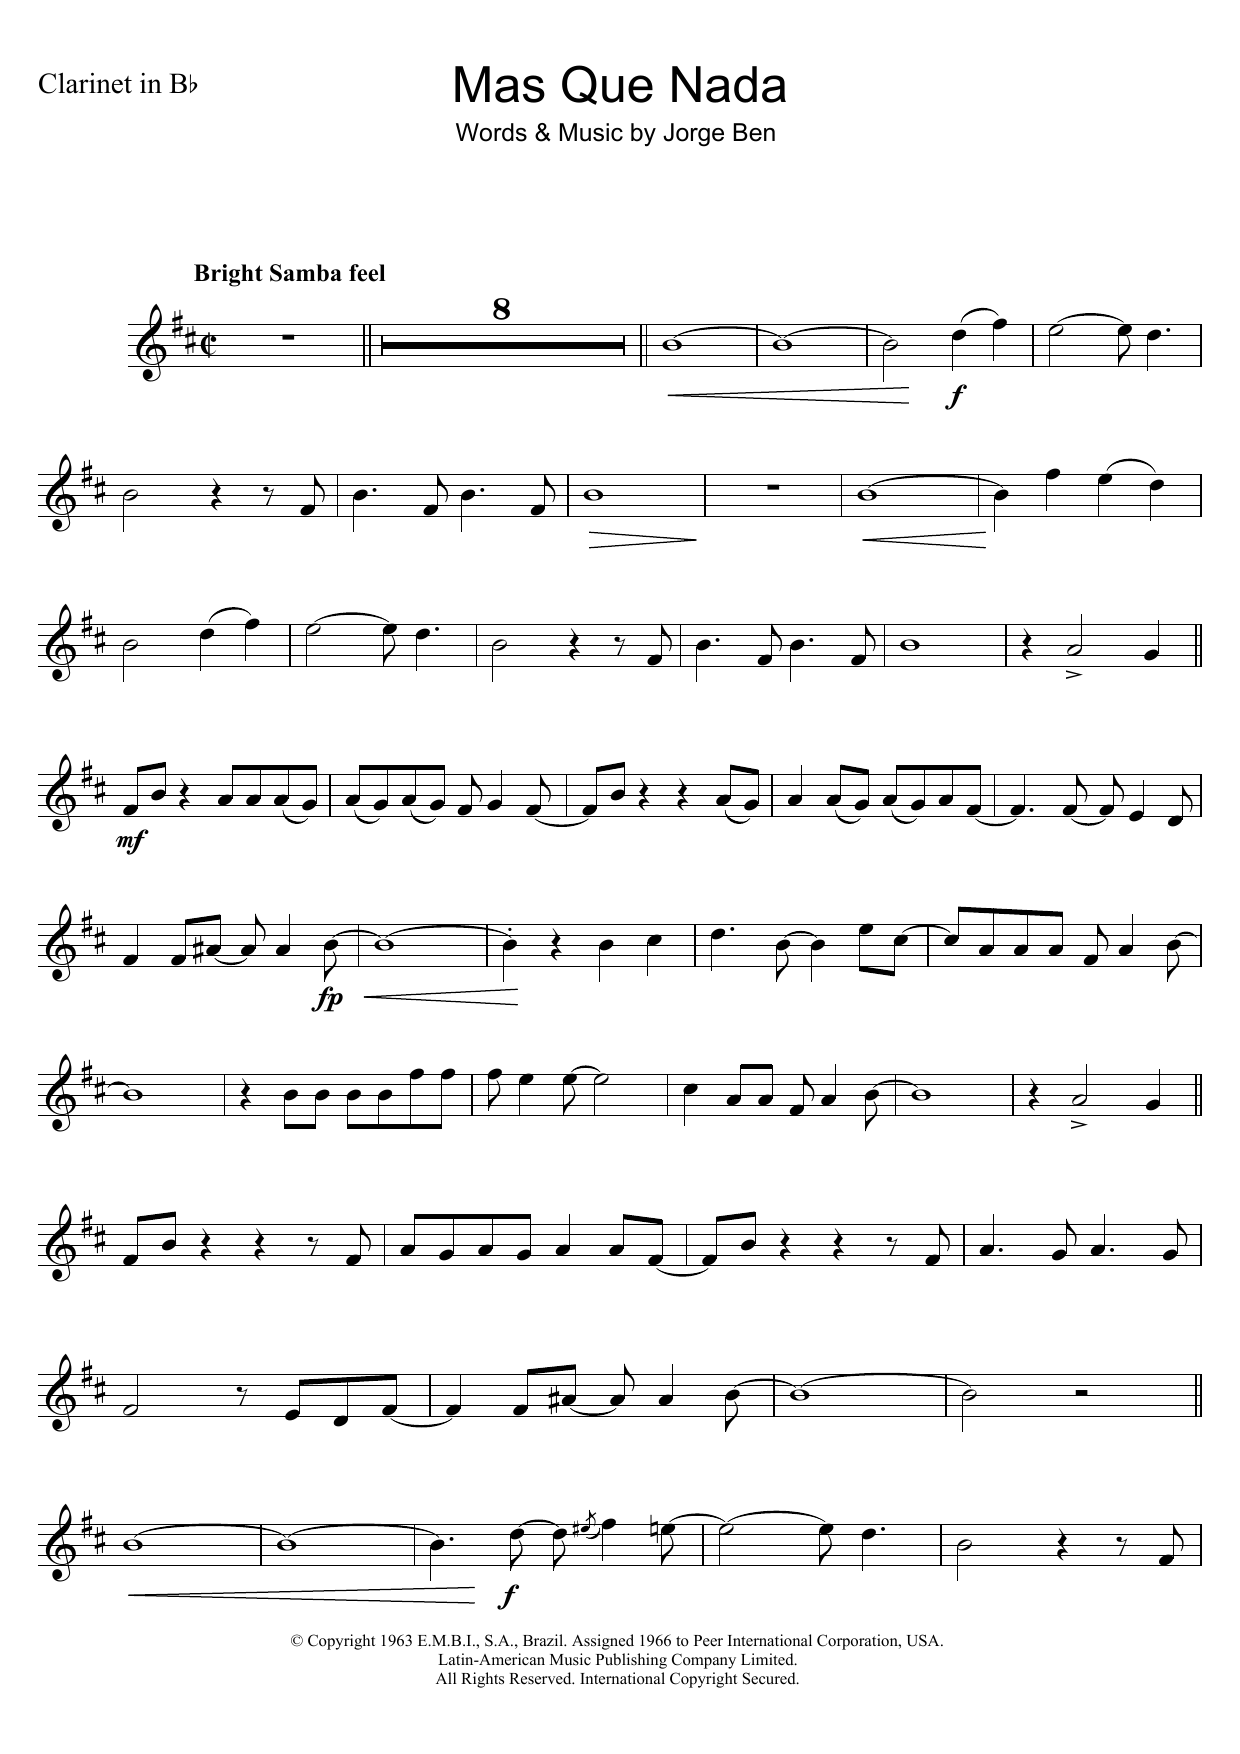 Jorge Ben Mas Que Nada (Say No More) Sheet Music Notes & Chords for Violin - Download or Print PDF